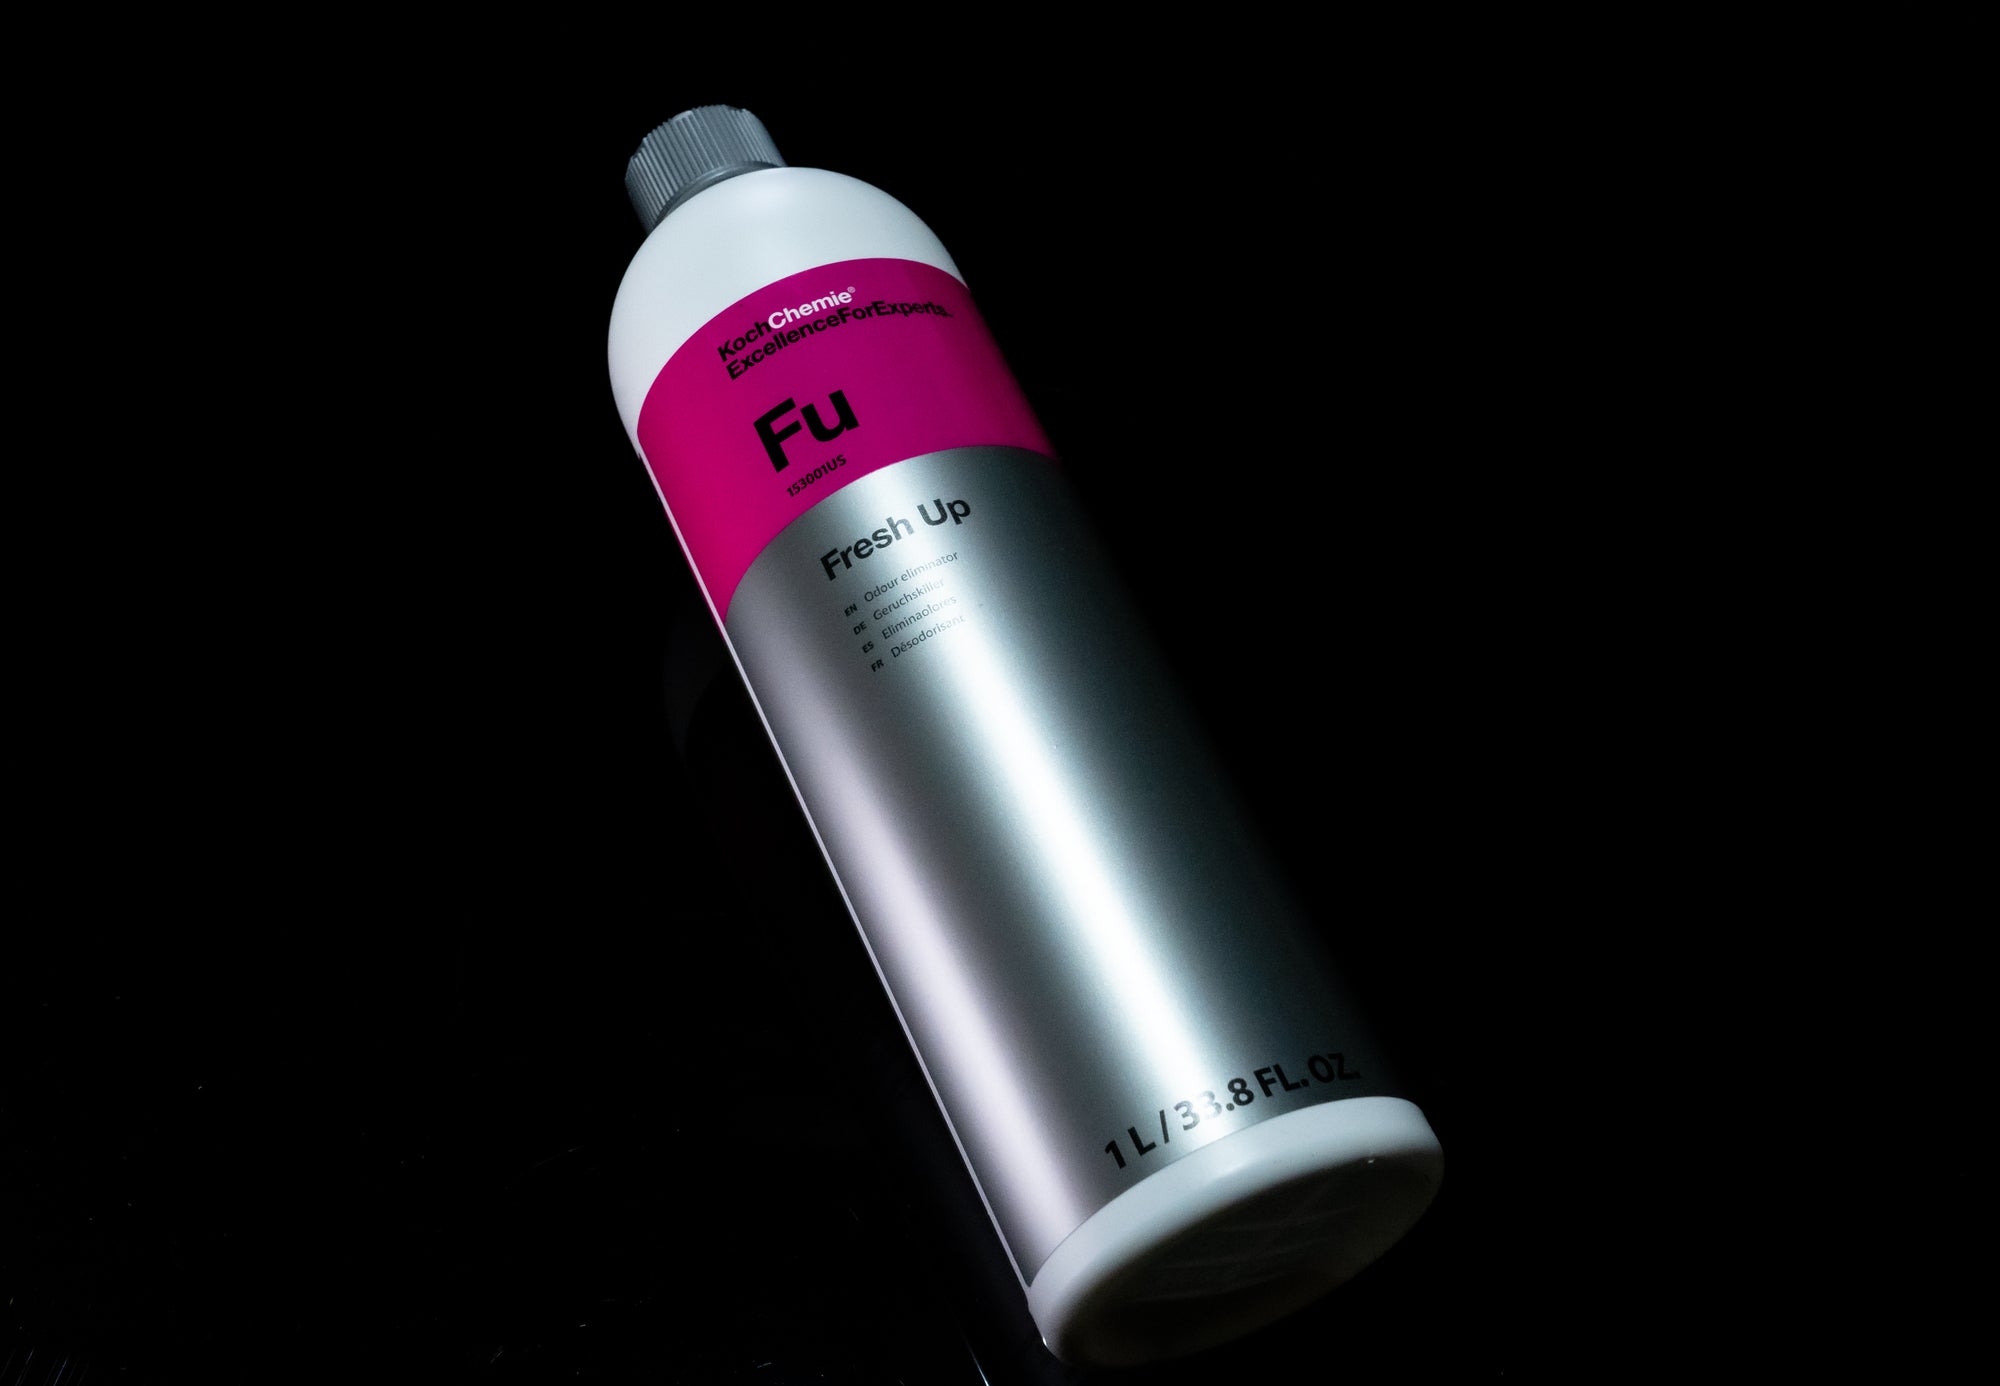 Koch Chemie Fresh Up Odor Eliminator Spray 1 Liter